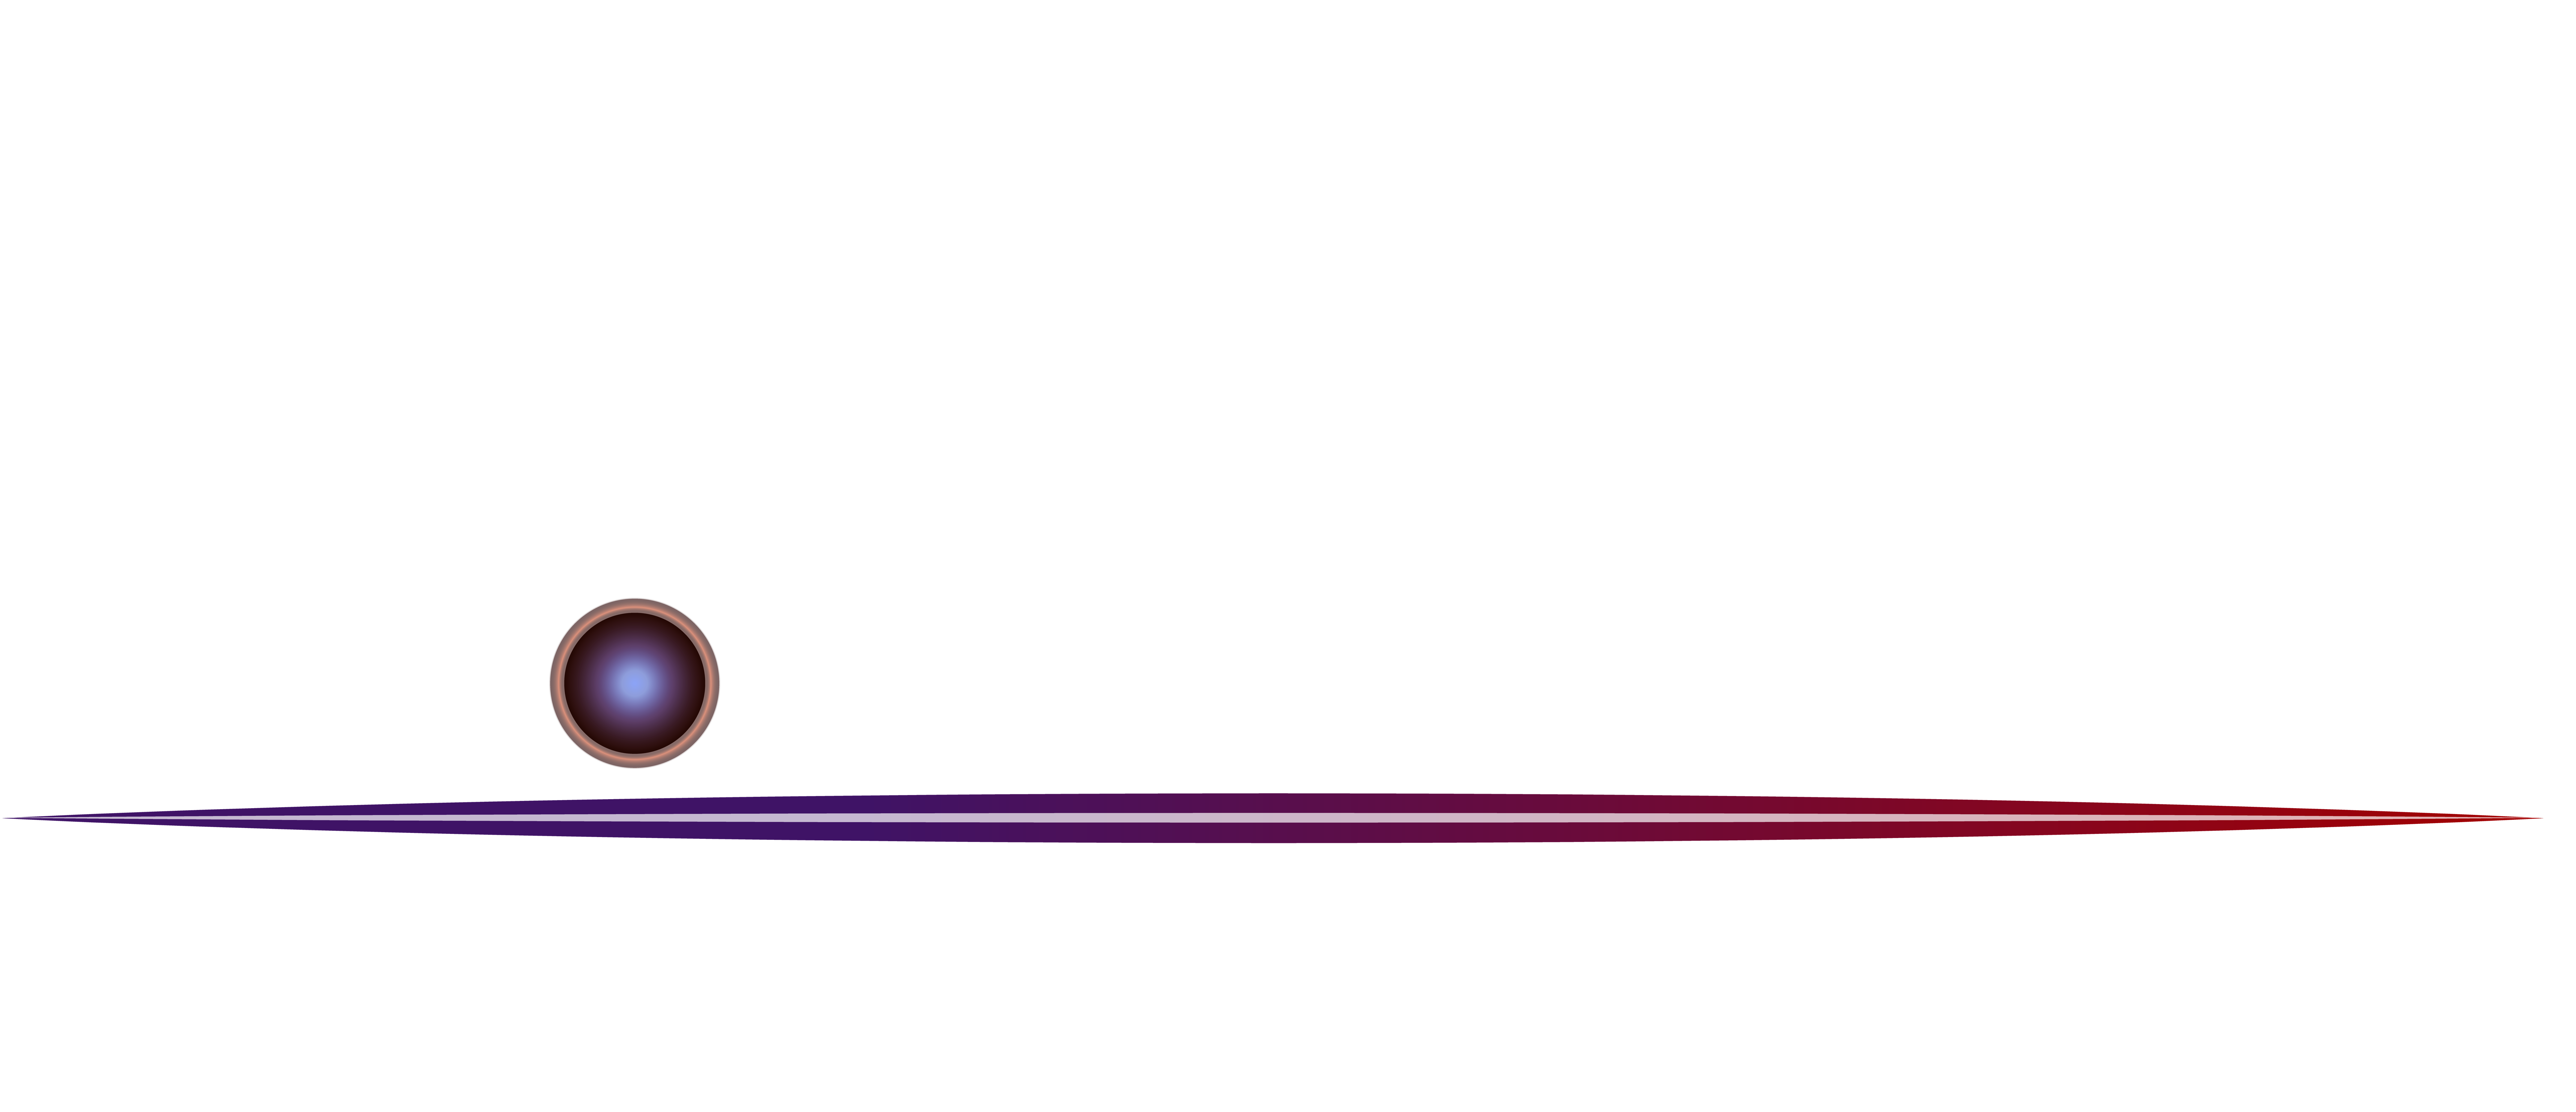 Urban Video's